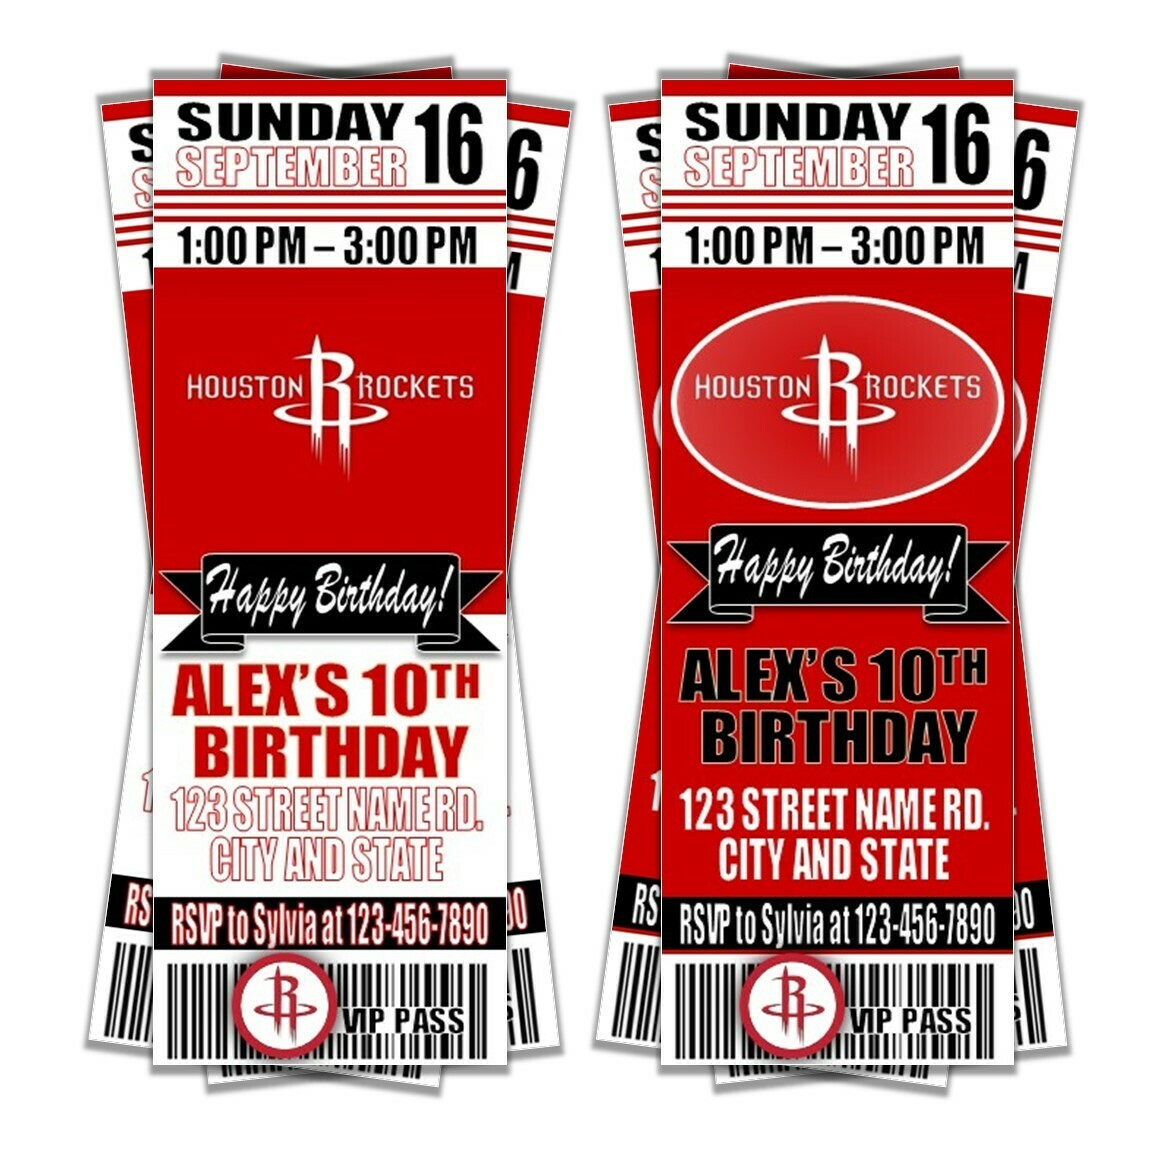 Houston Rockets NBA Basketball Birthday Invitation Ticket Style